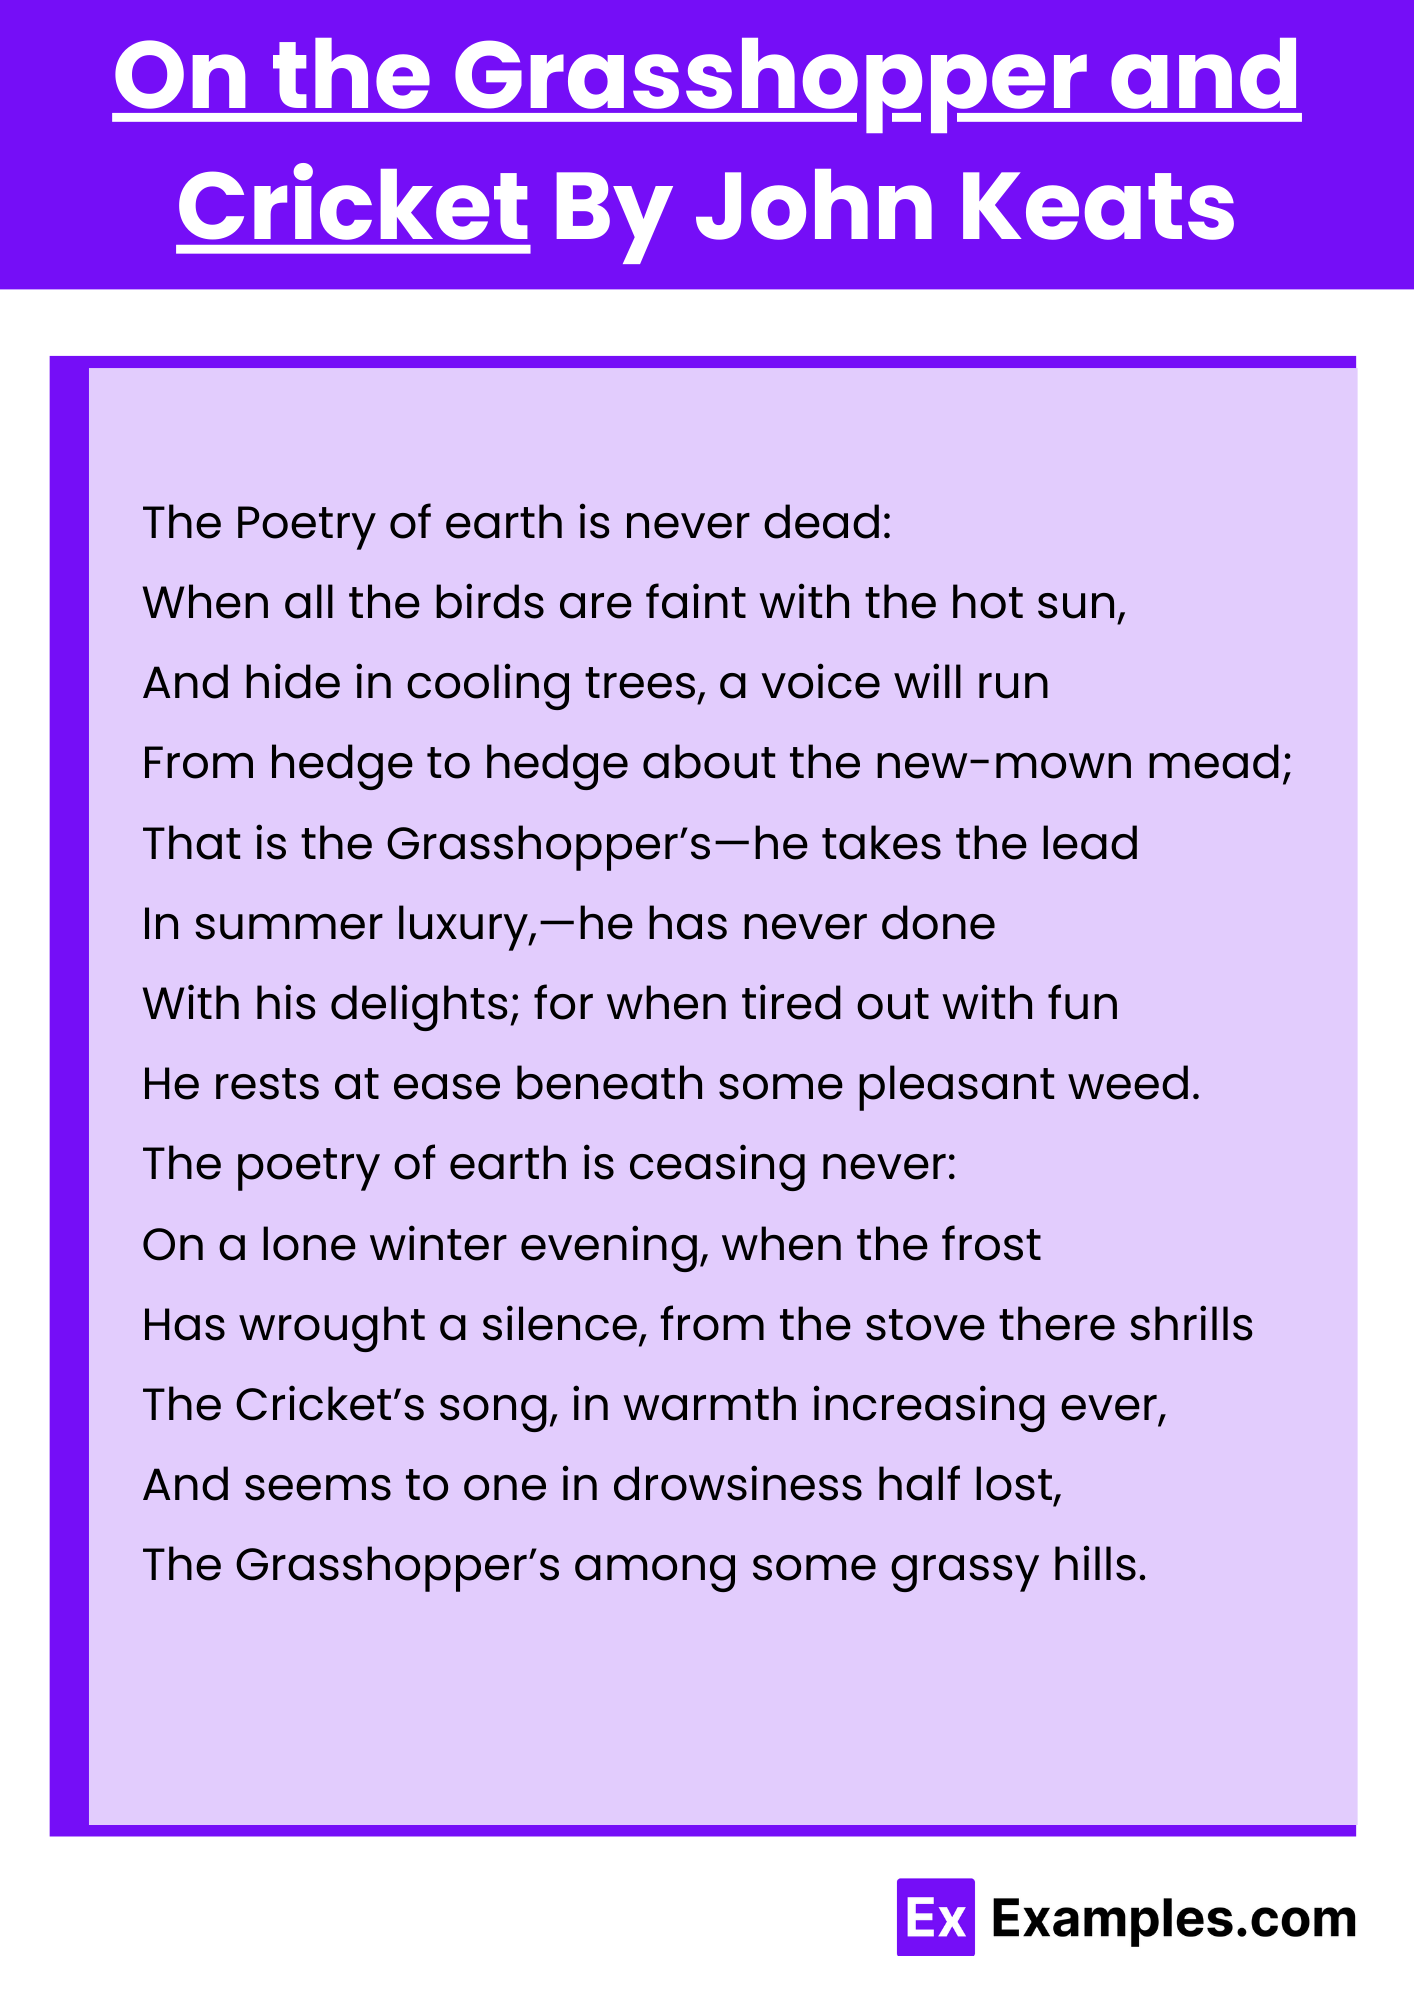 On the Grasshopper and Cricket By John Keats